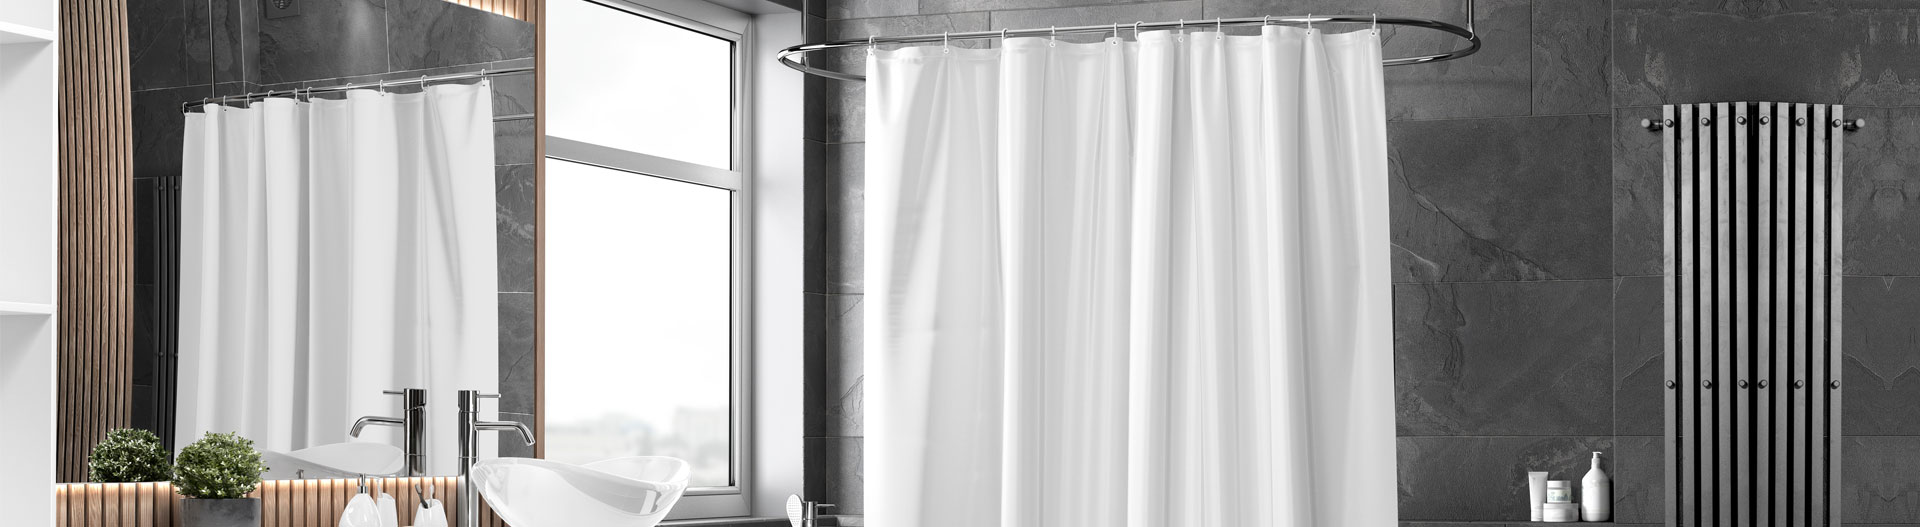 Henderson Glass Warehouse - Install a Shower Curtain Banner